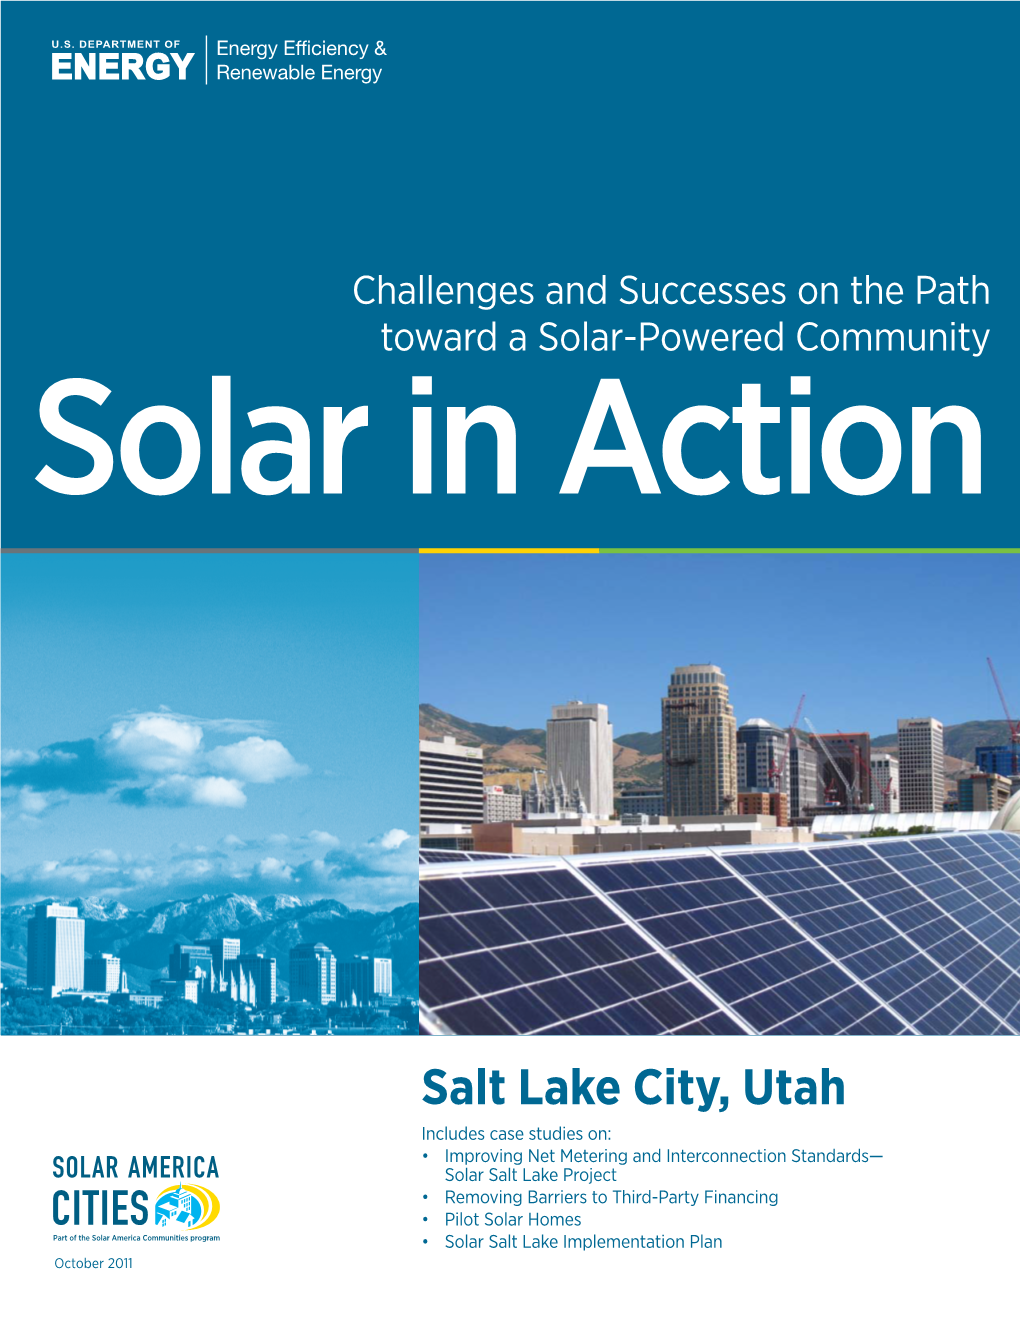 Salt Lake City, Utah: Solar in Action (Brochure), Solar America Cities